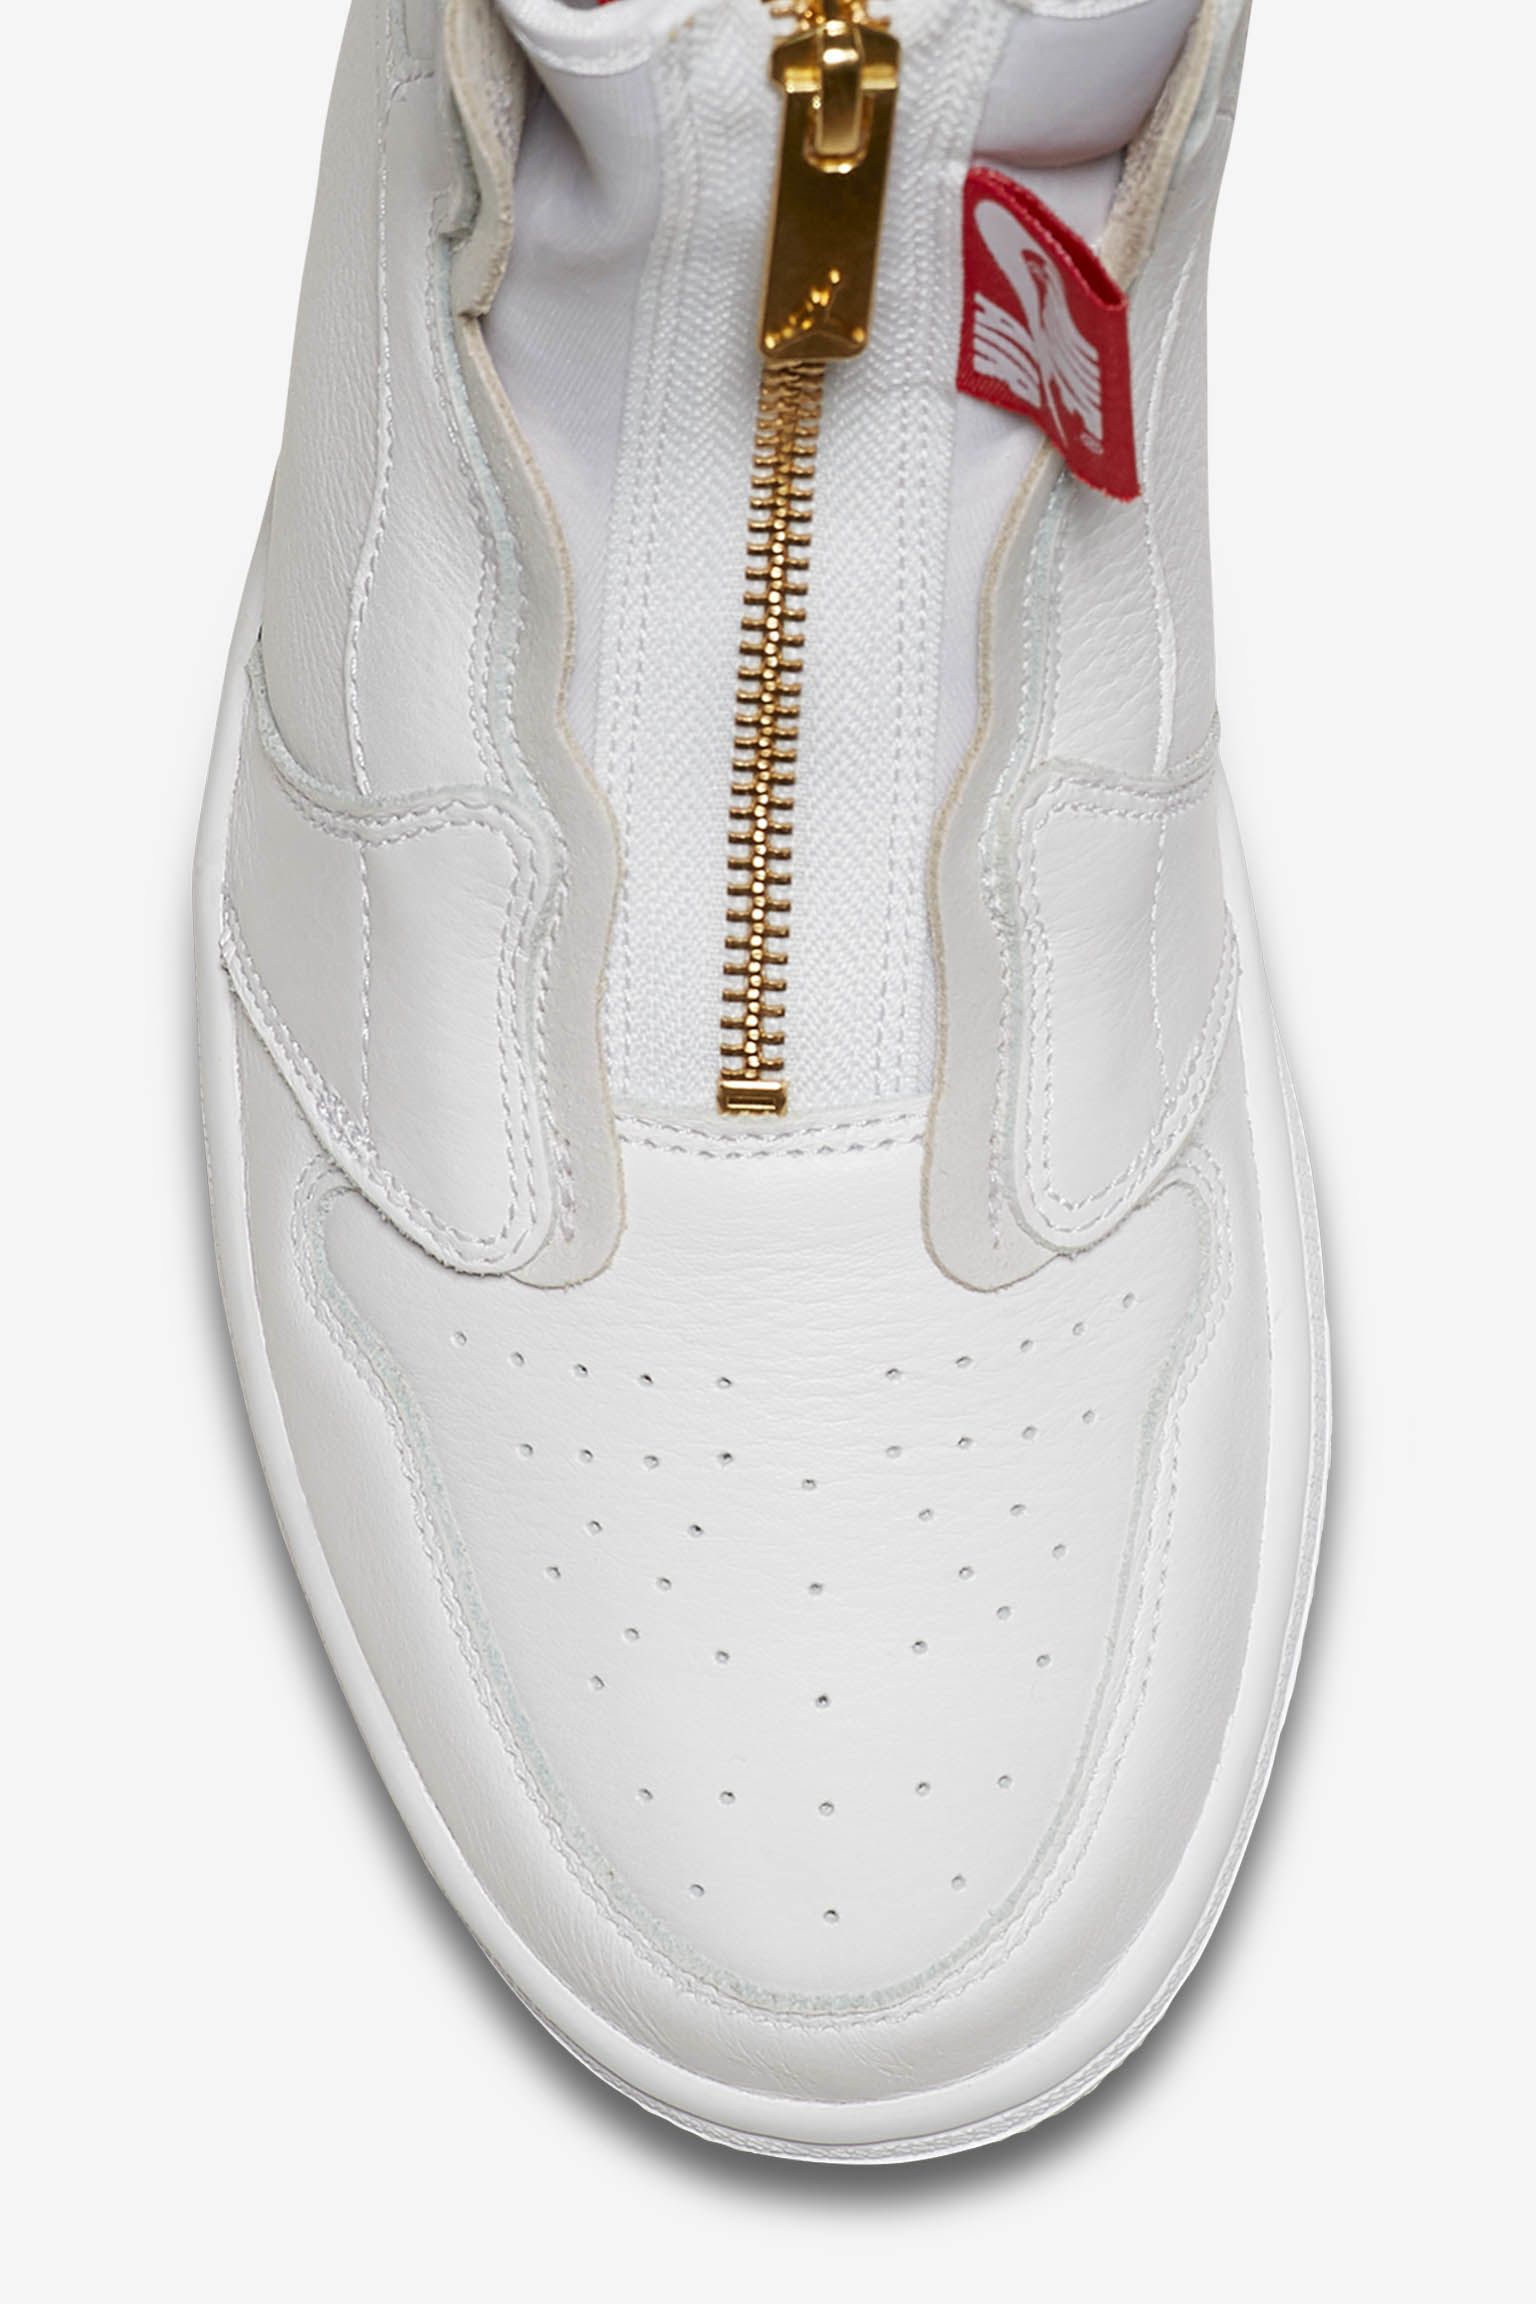 Women's Air Jordan 1 High Zip 'White & University Red' Release